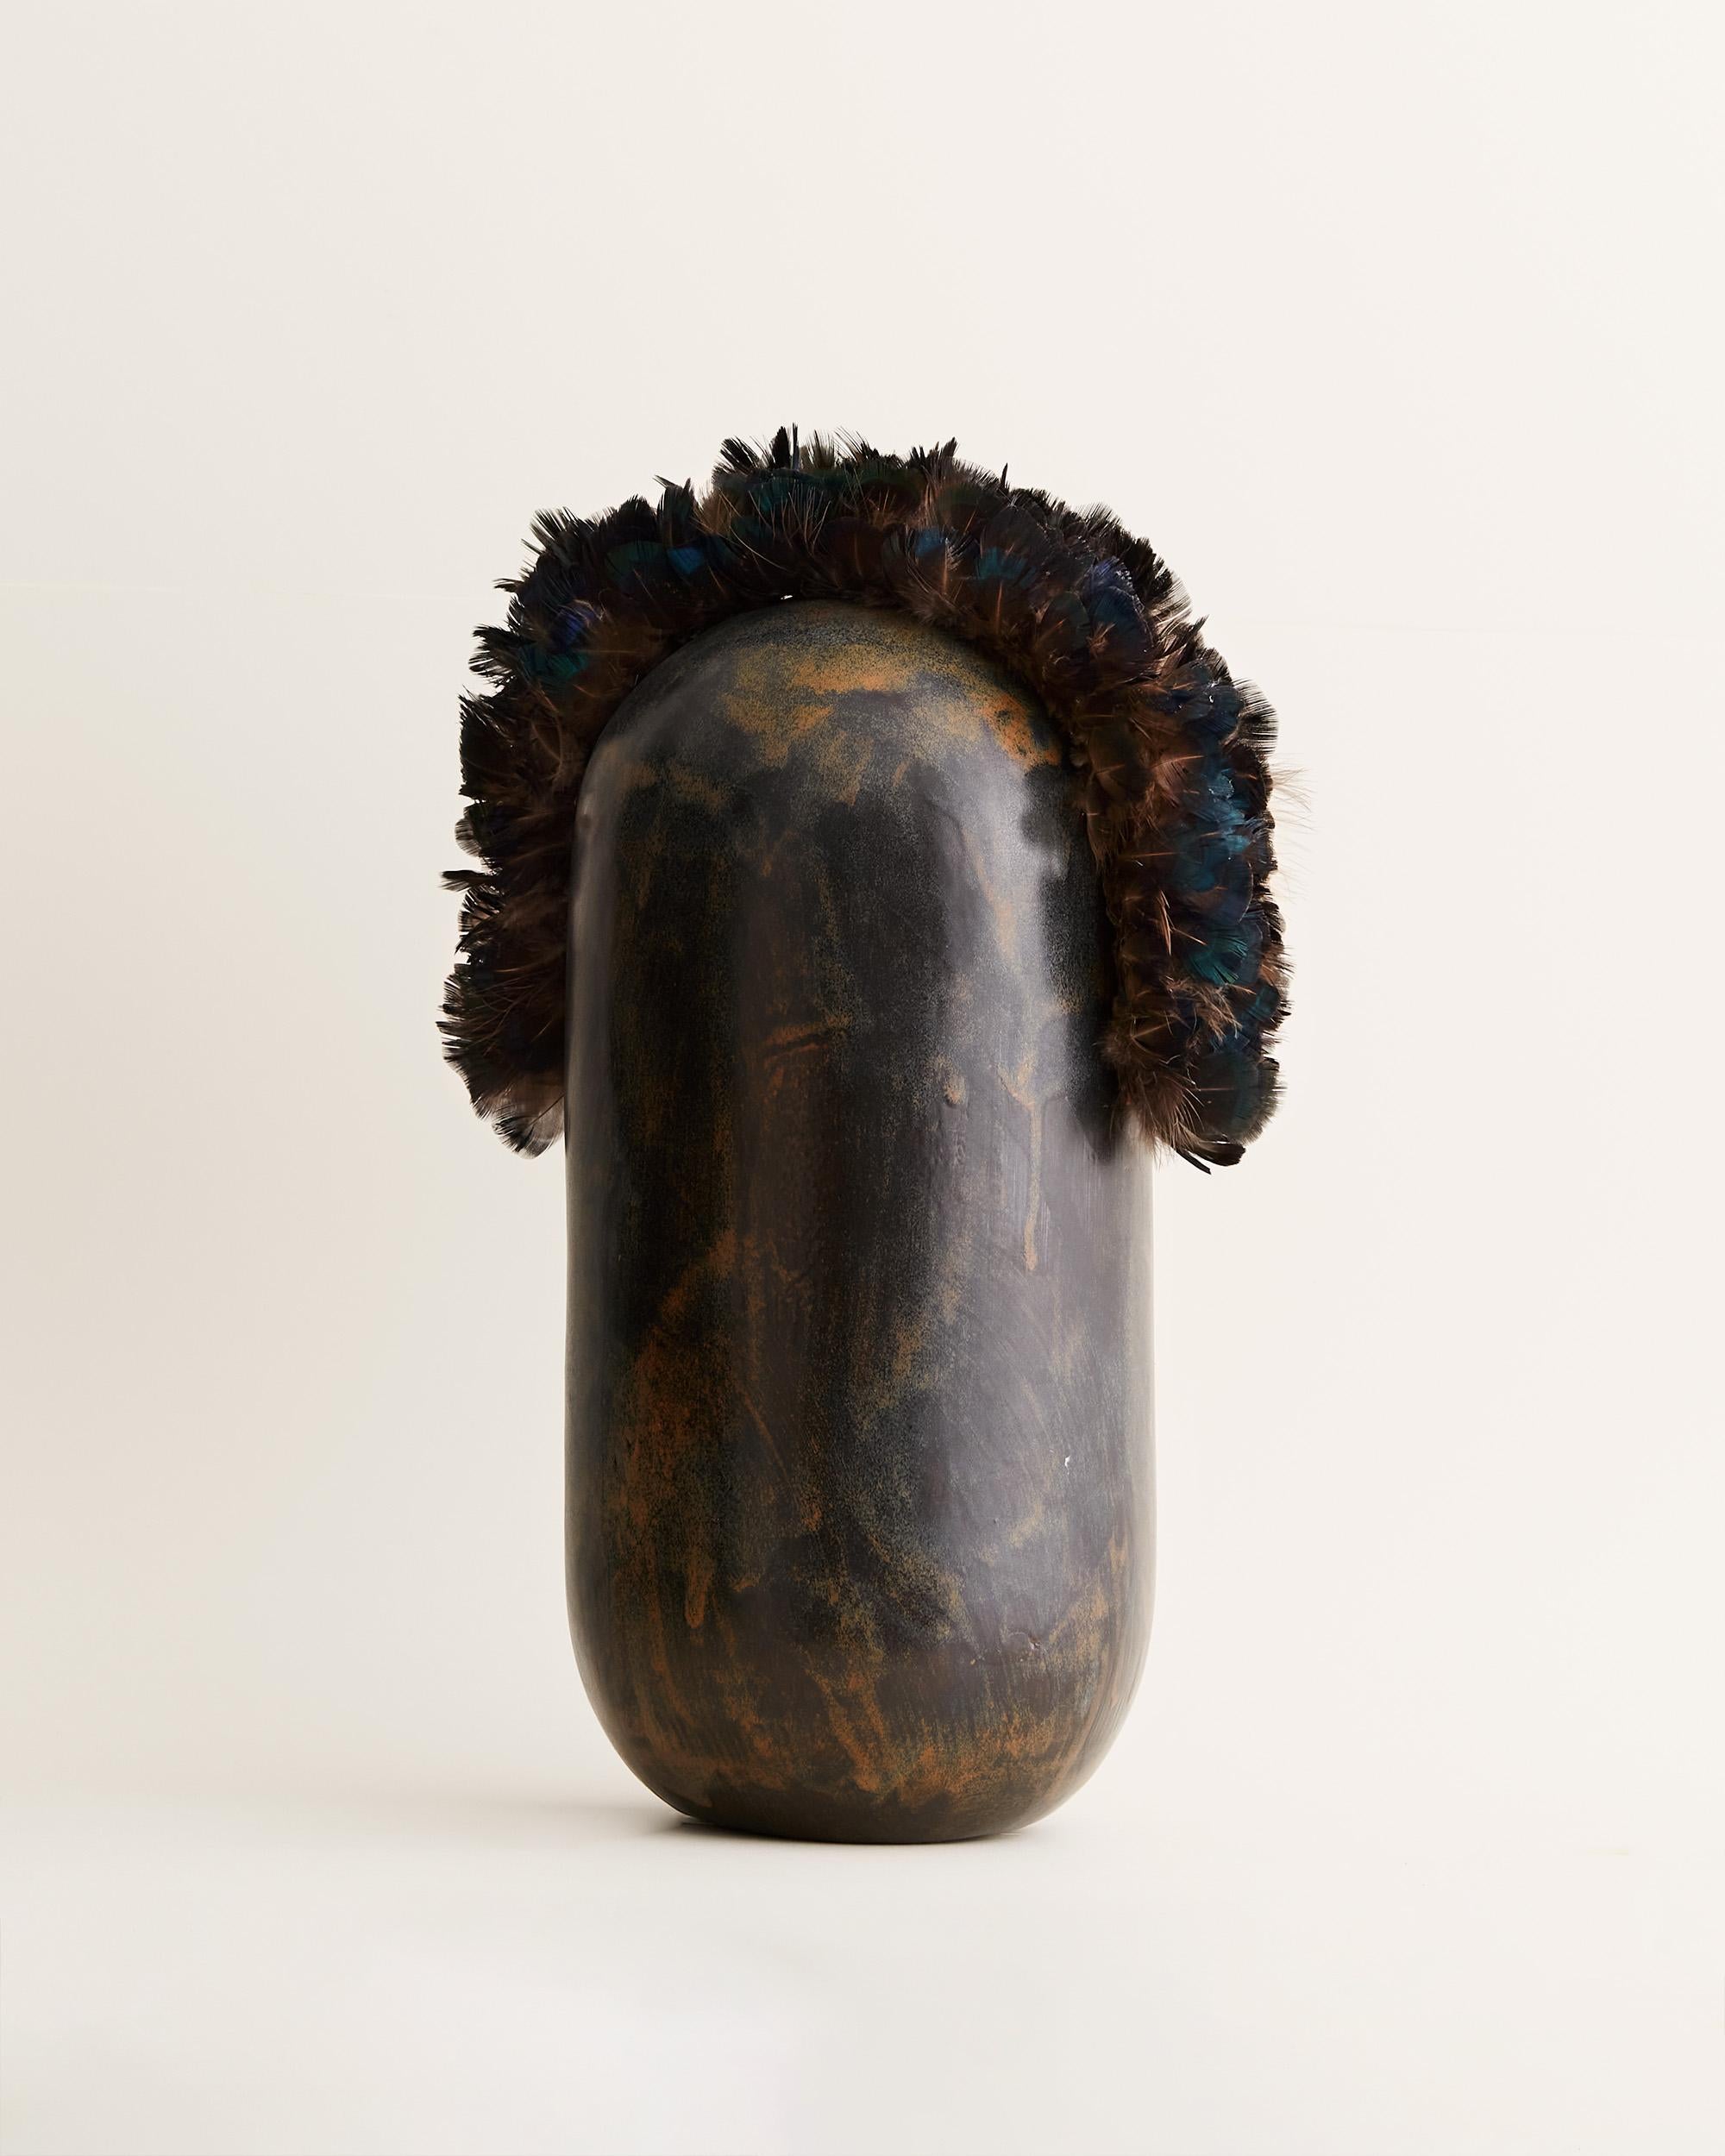 Angélique de Chabot Abstract Sculpture - Baboun - Contemporary Abstract Ceramic with feathers sculpture